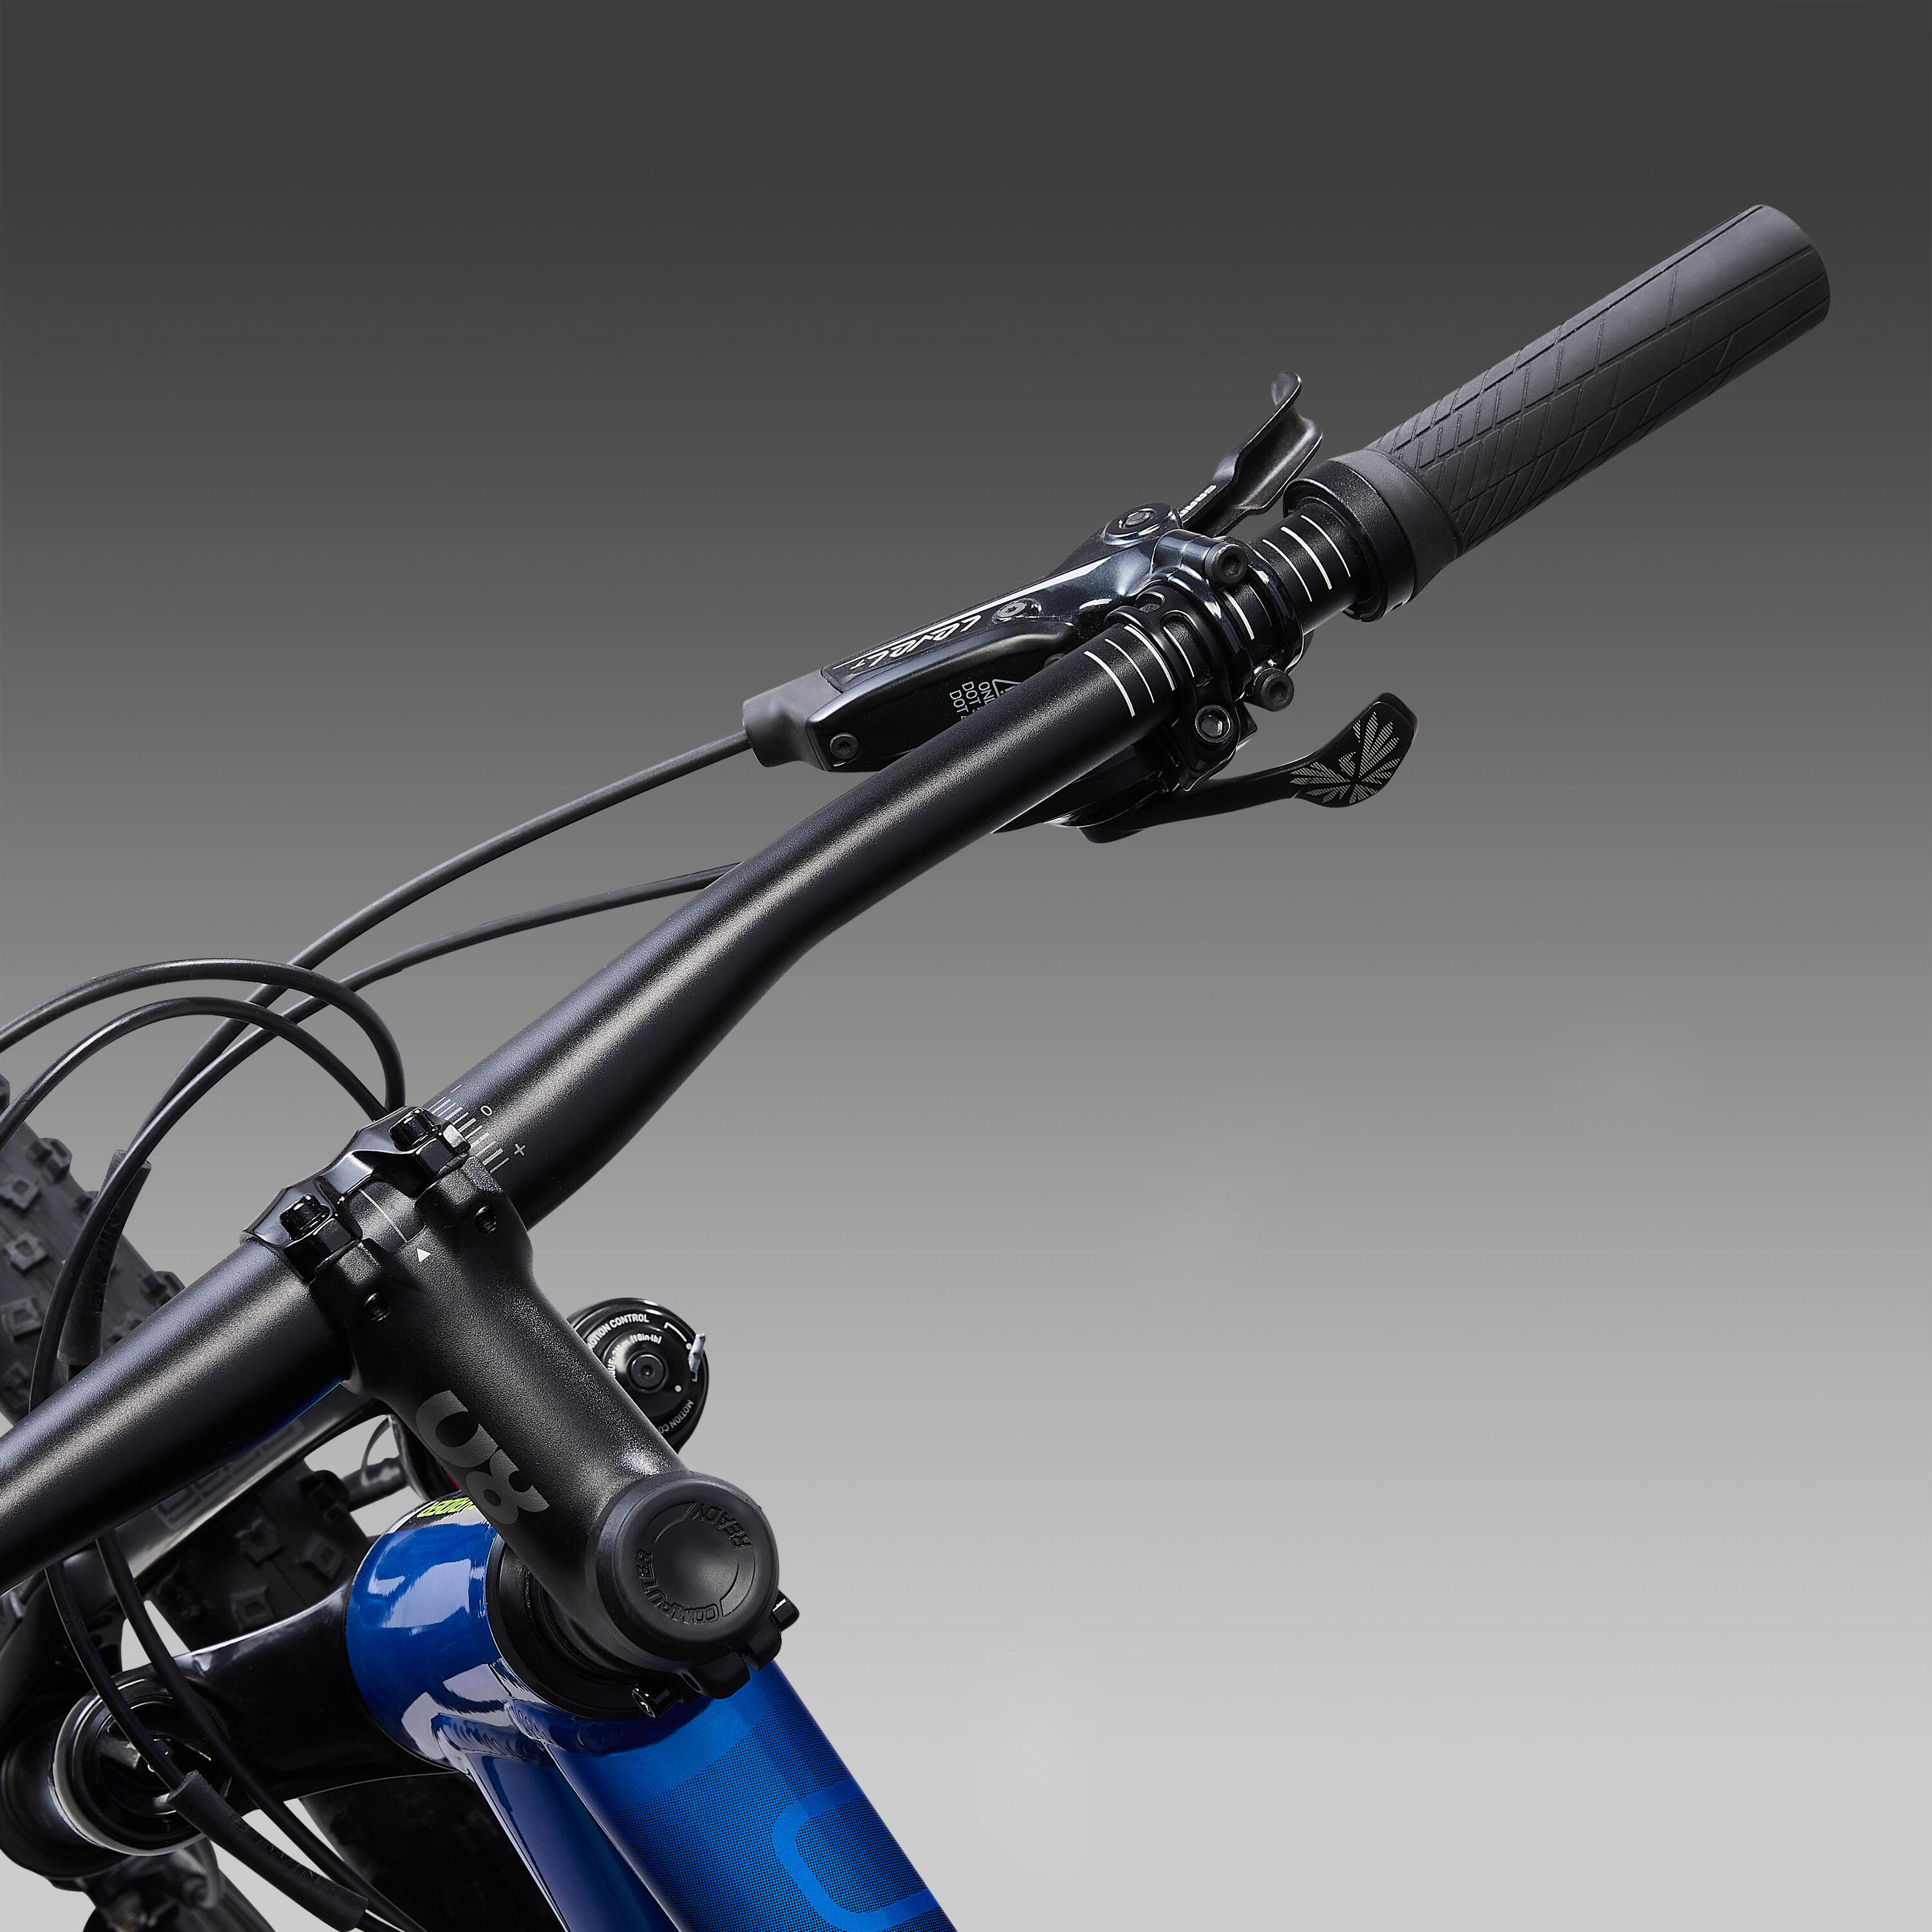 29" Semi Rigid Mountain Bike XC 500 Eagle 1x12 - Electric Blue 6/12